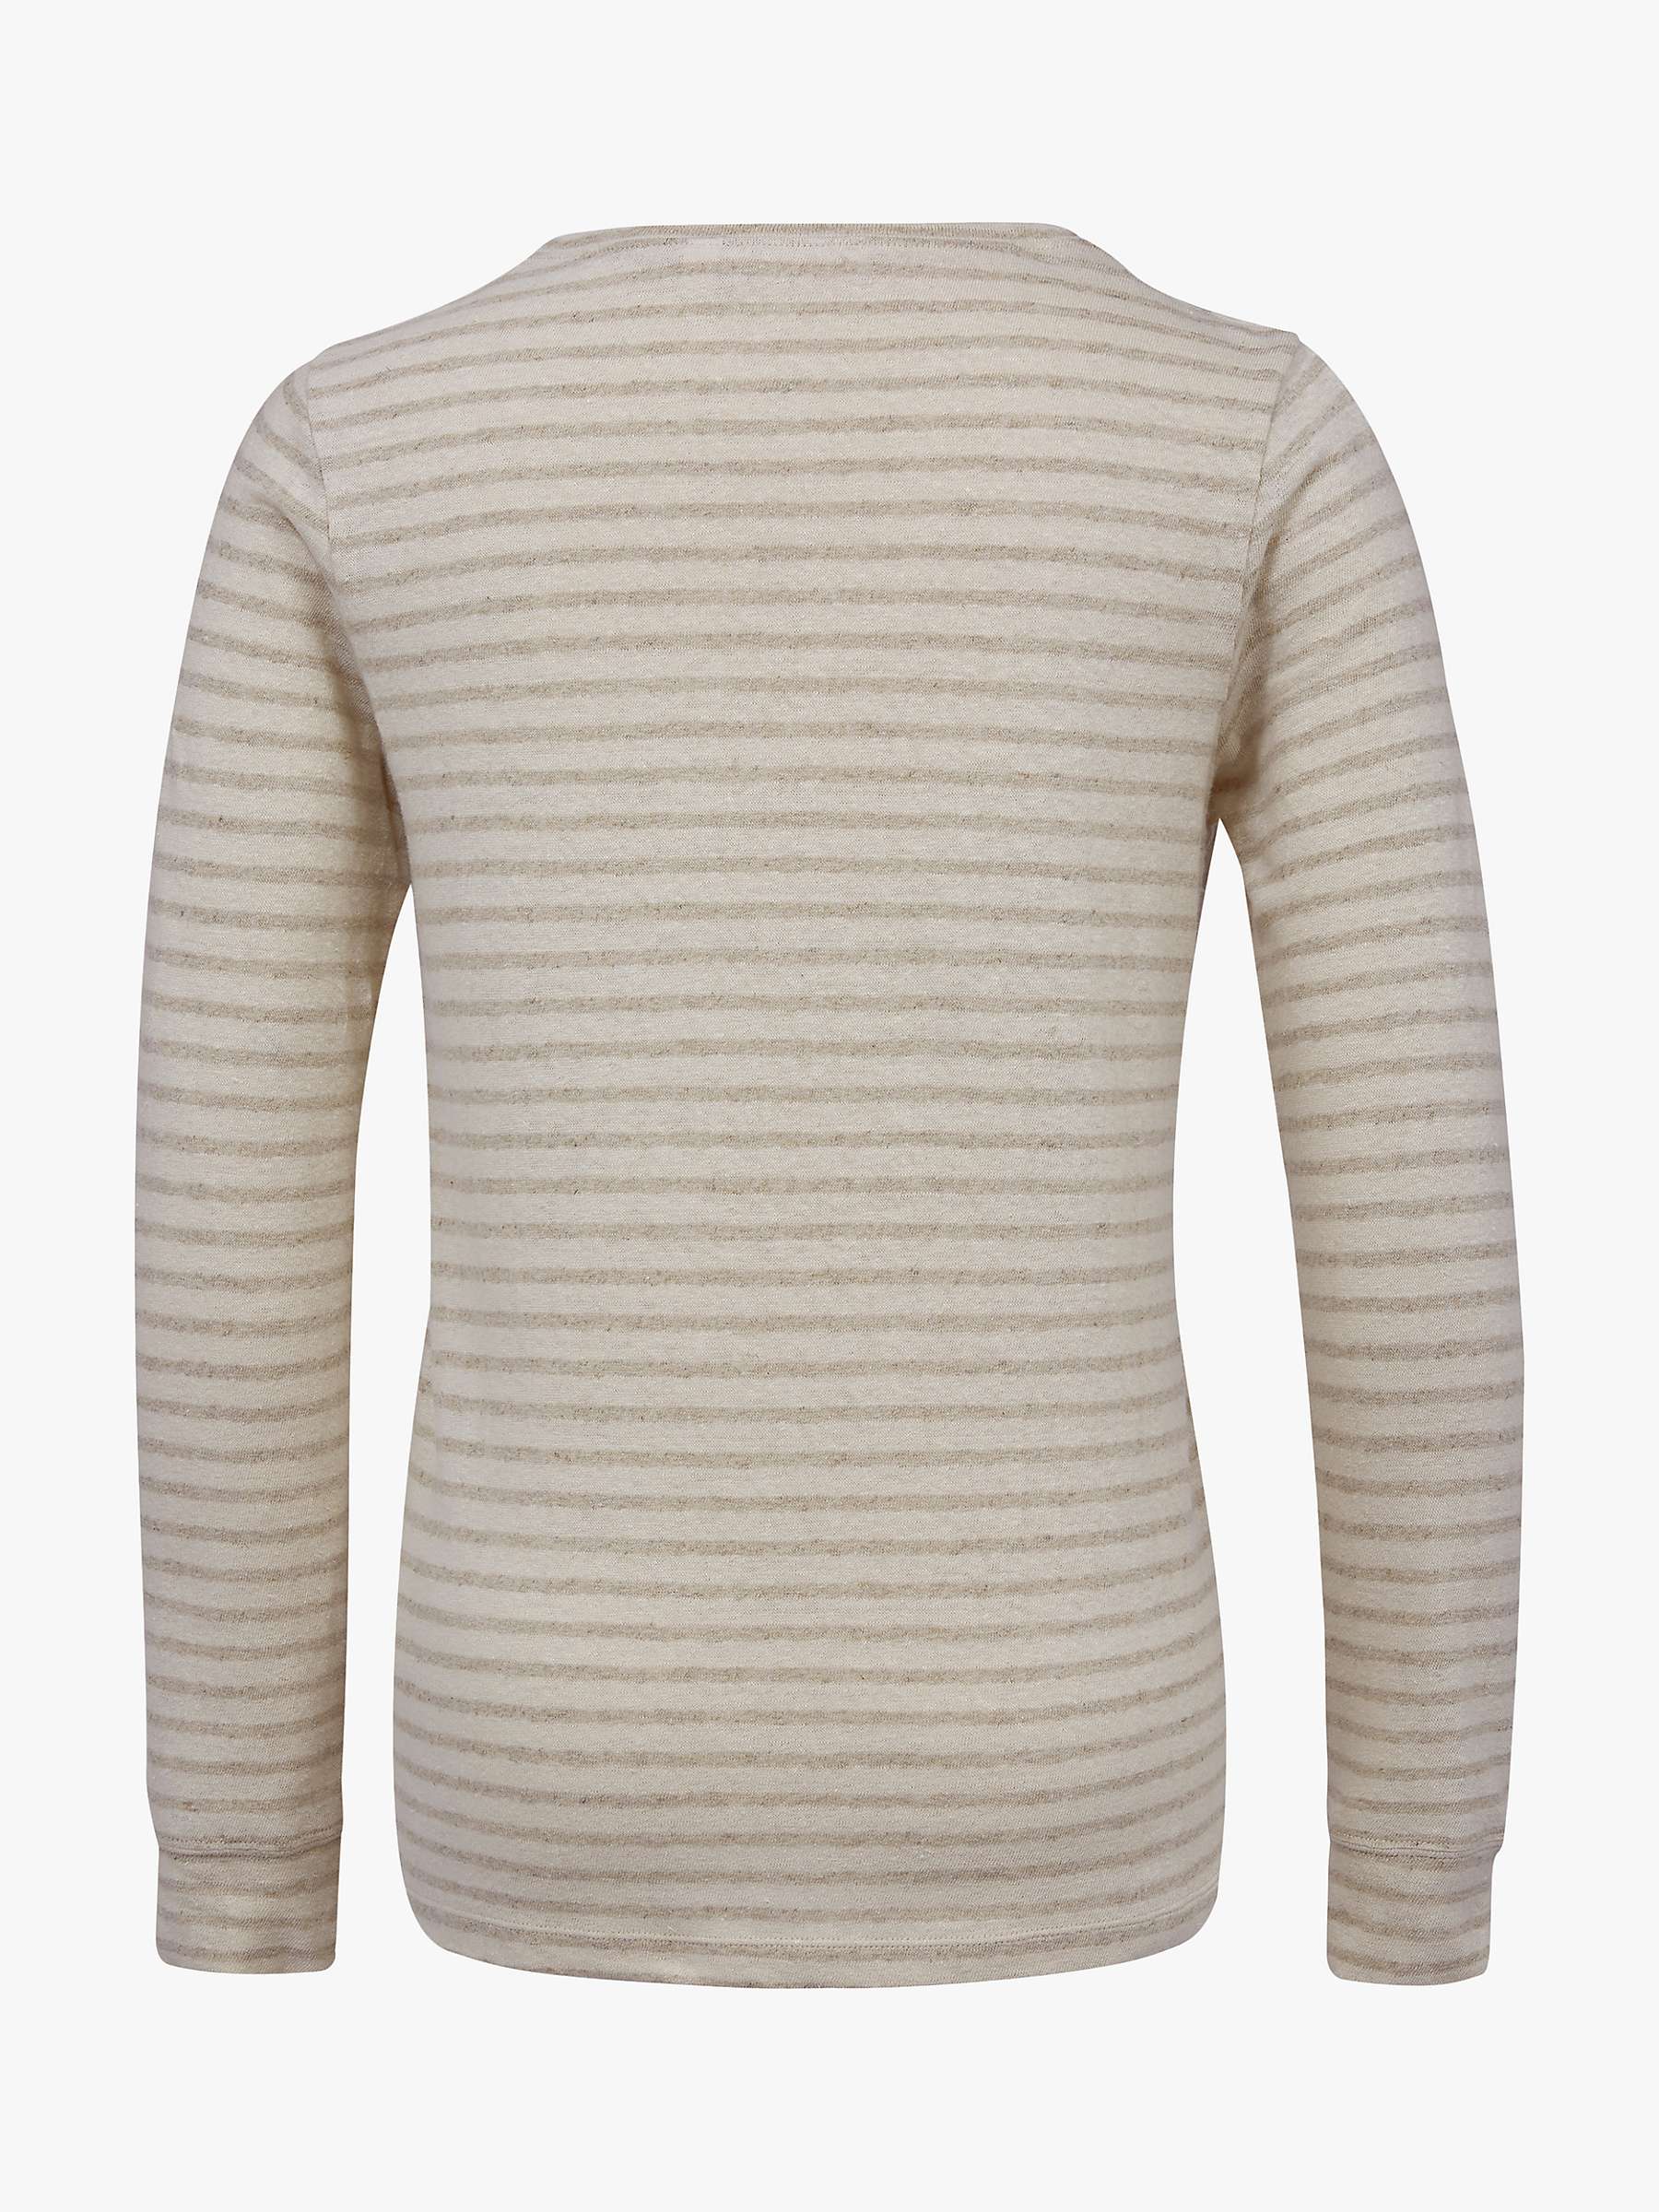 Buy Celtic & Co. Henley Stripe Linen and Cotton Top, Ecru Oatmeal Online at johnlewis.com